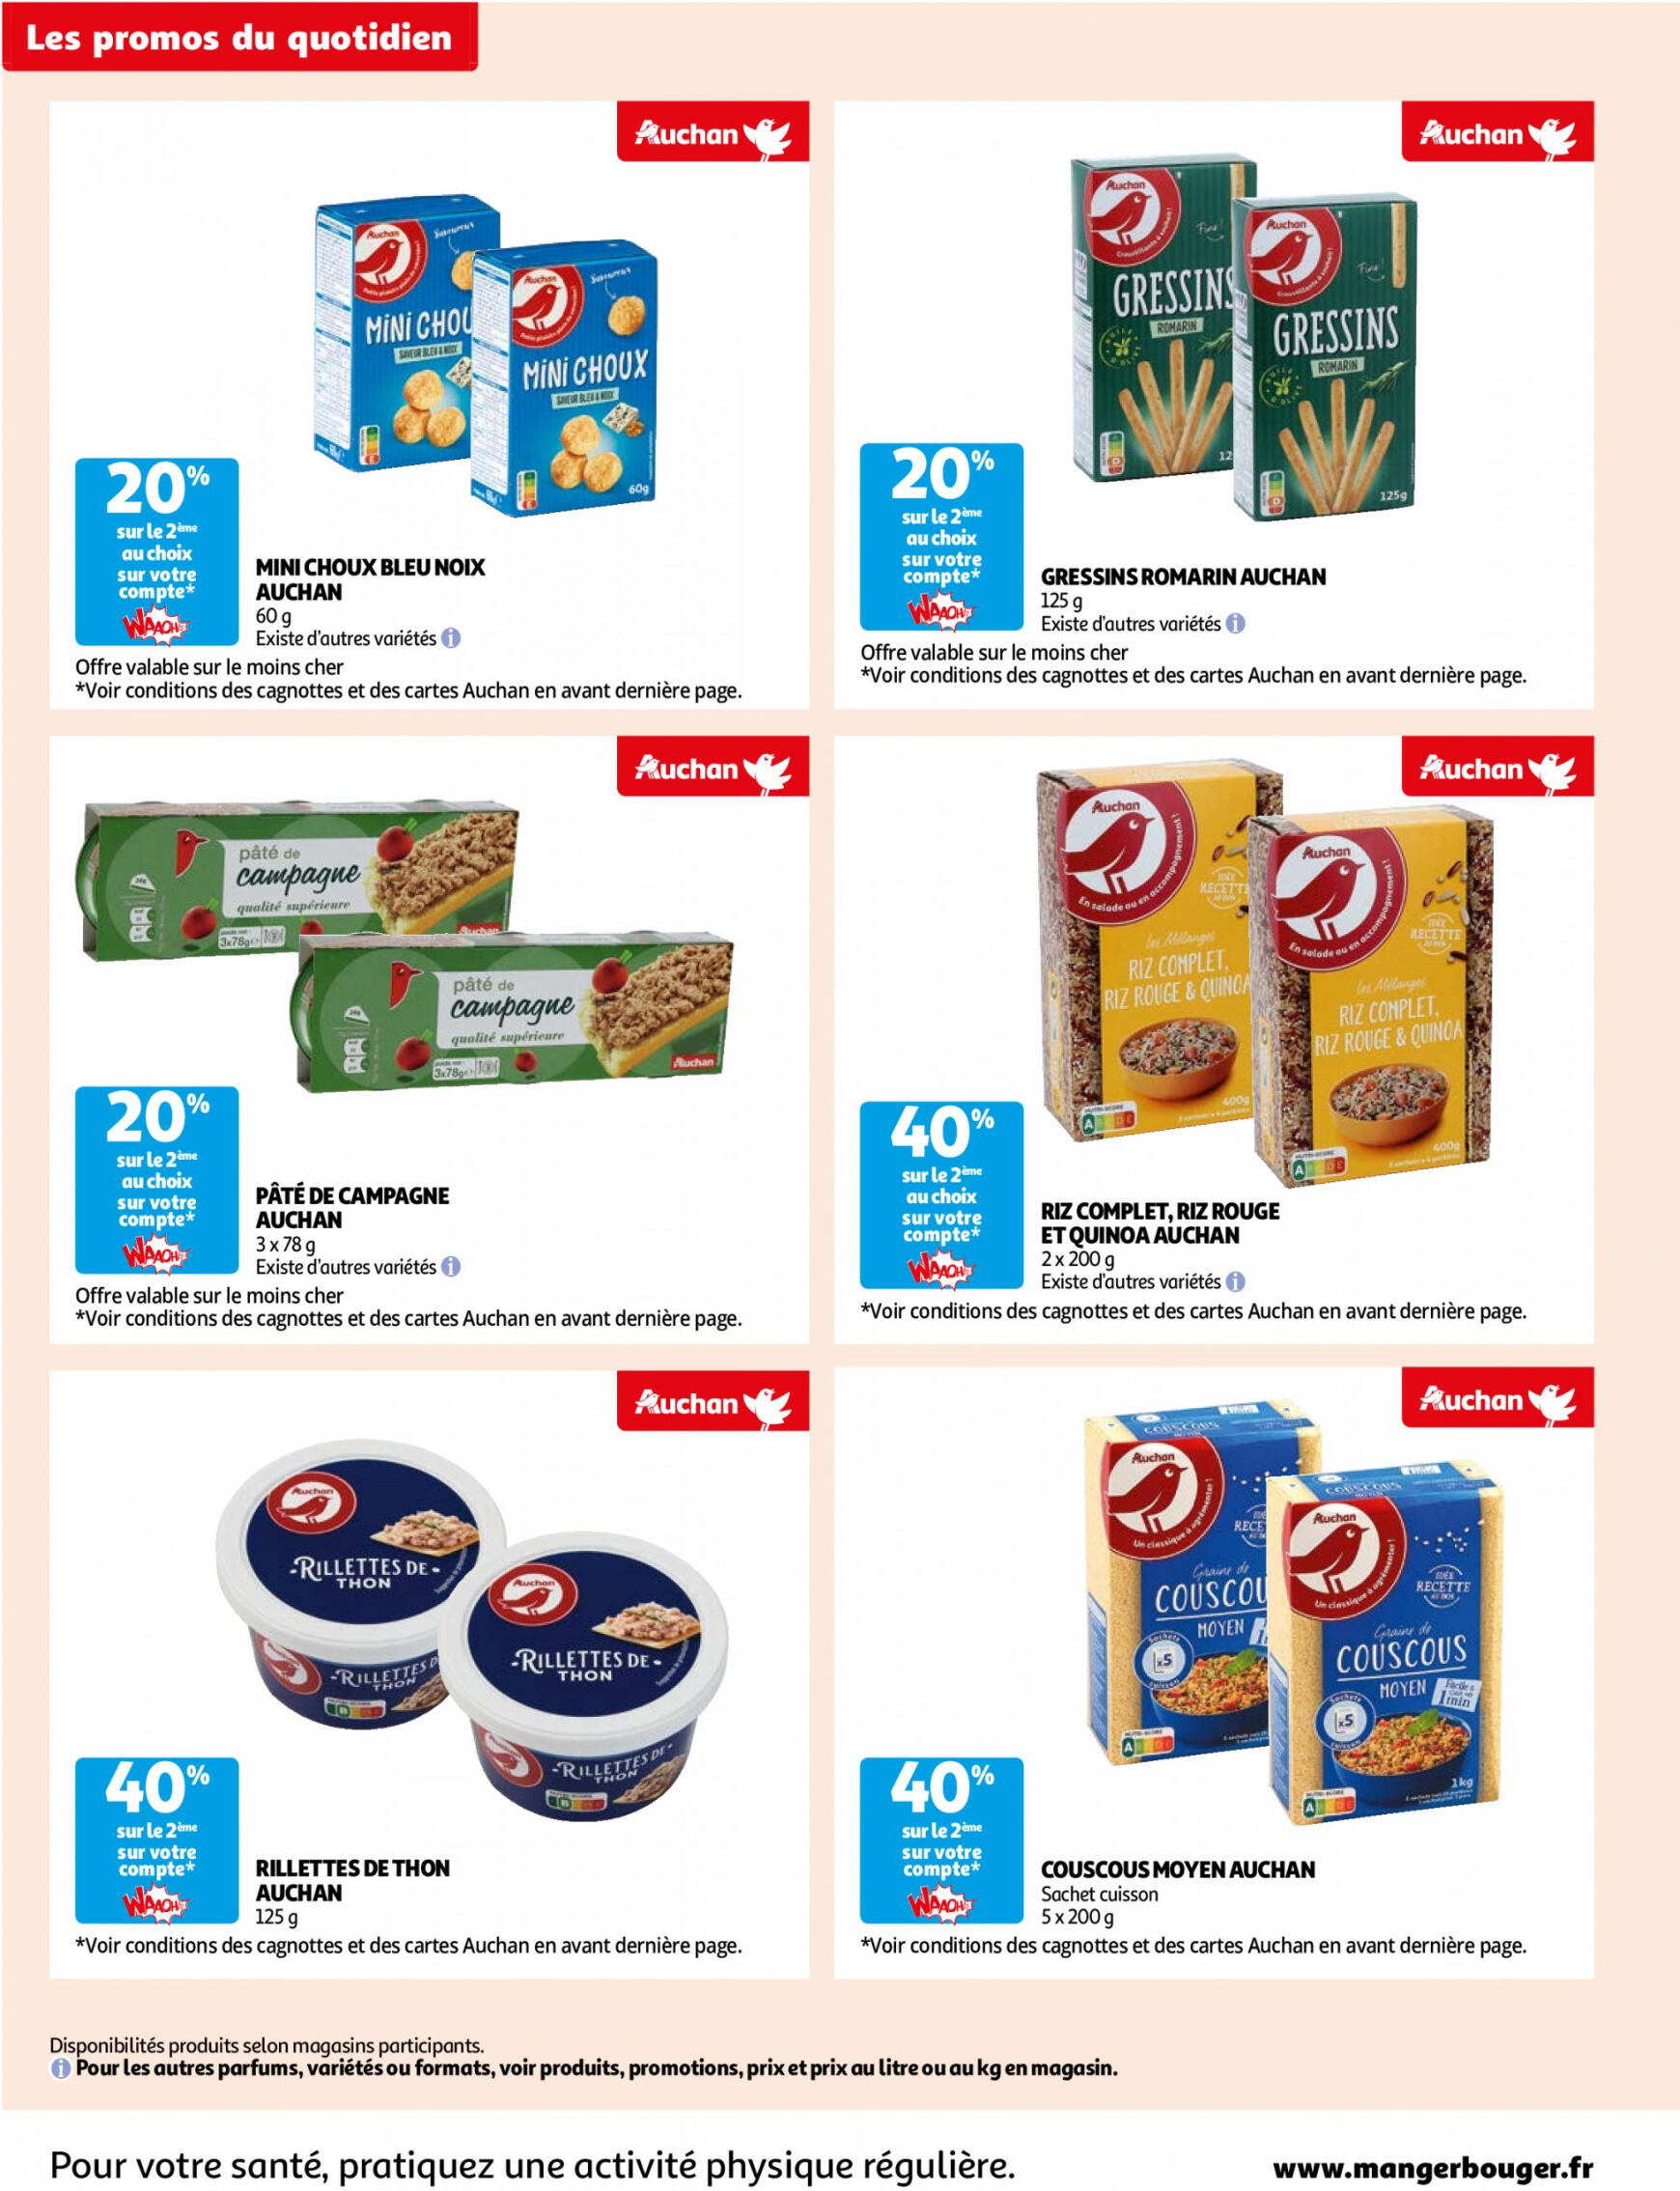 auchan - Auchan - Supermarché folder huidig 14.05. - 02.06. - page: 4